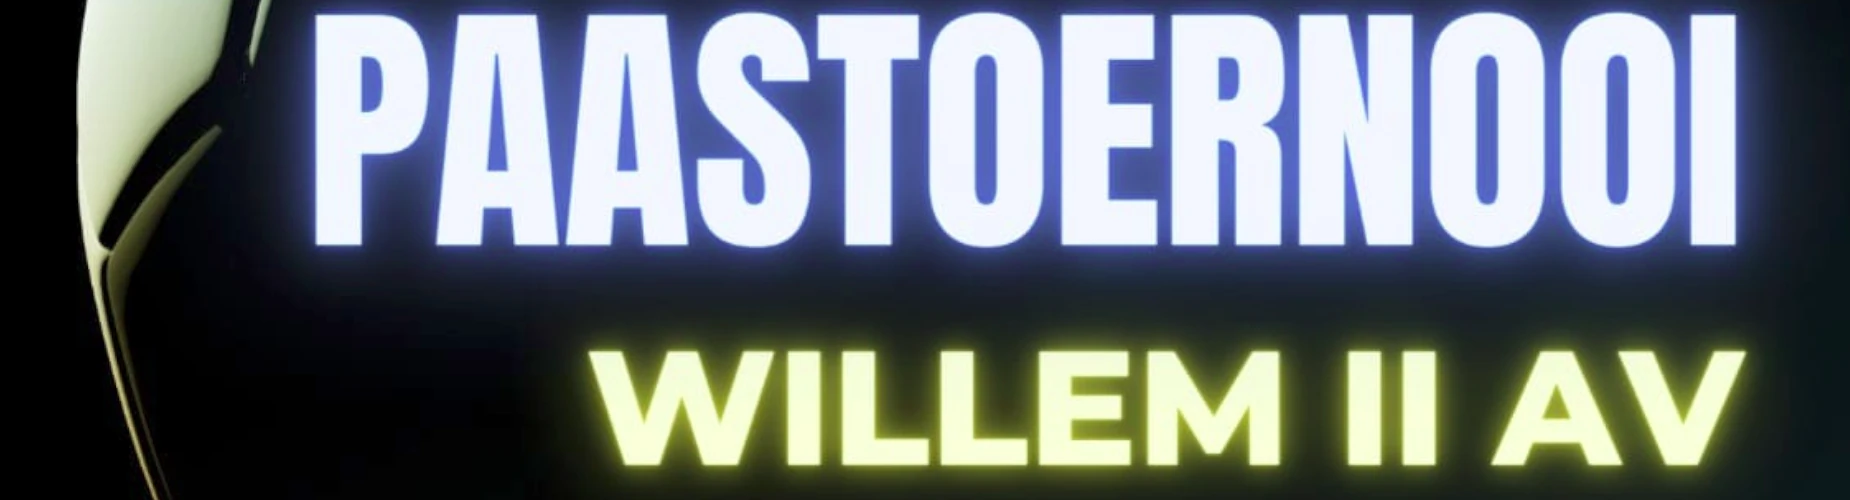 Banner - Paastoernooi Willem II - Willem II - Tilburg